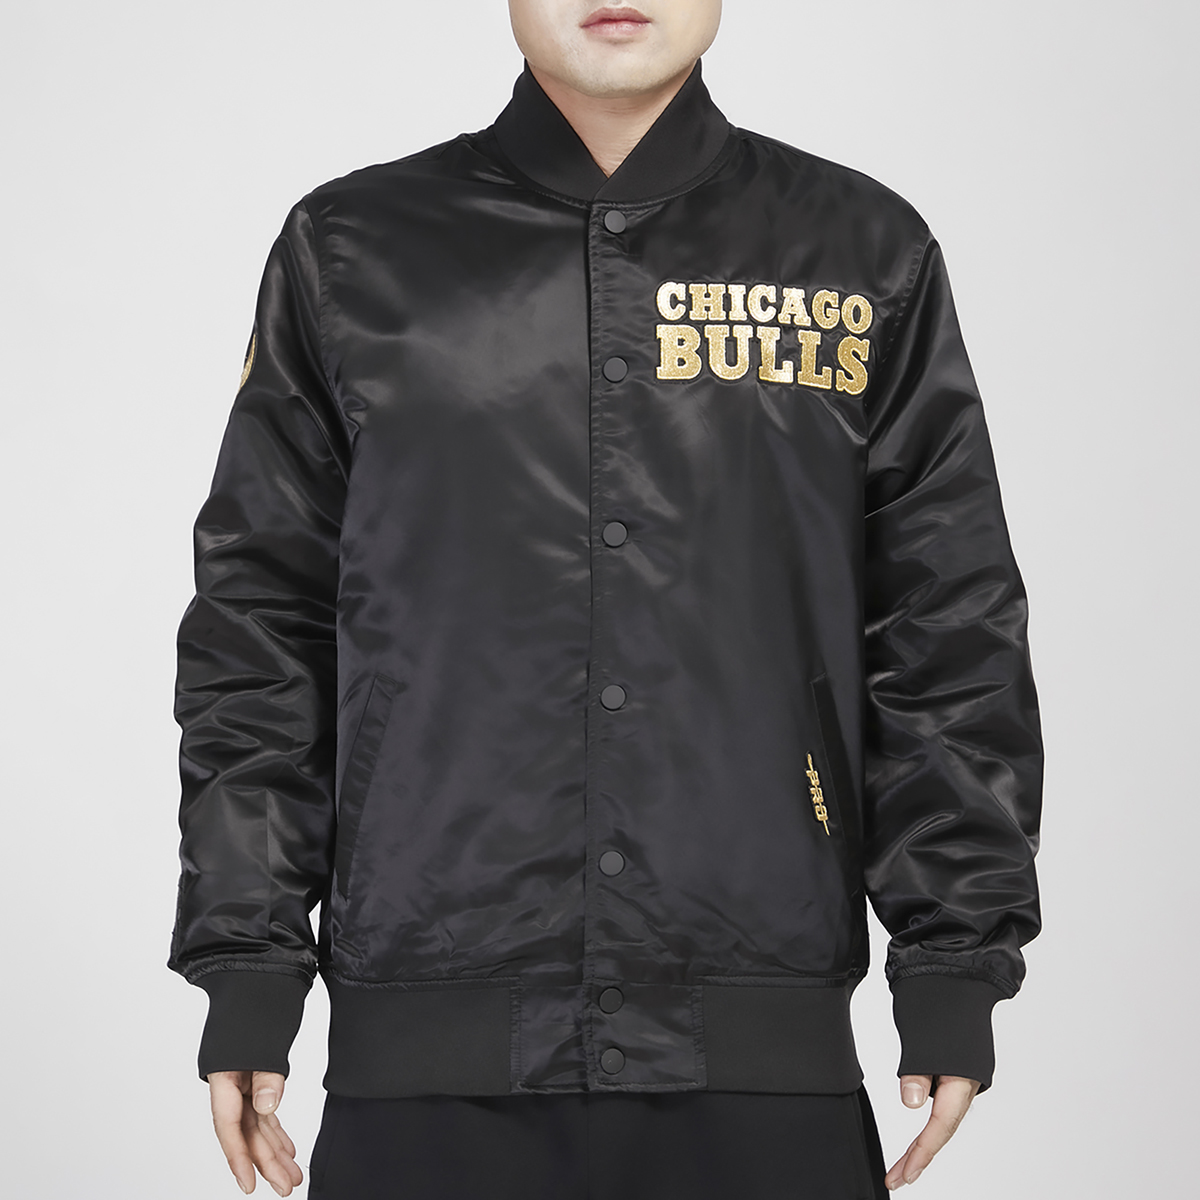 Chicago-Bulls-Pro-Standard-Black-Gold-Jacket-1